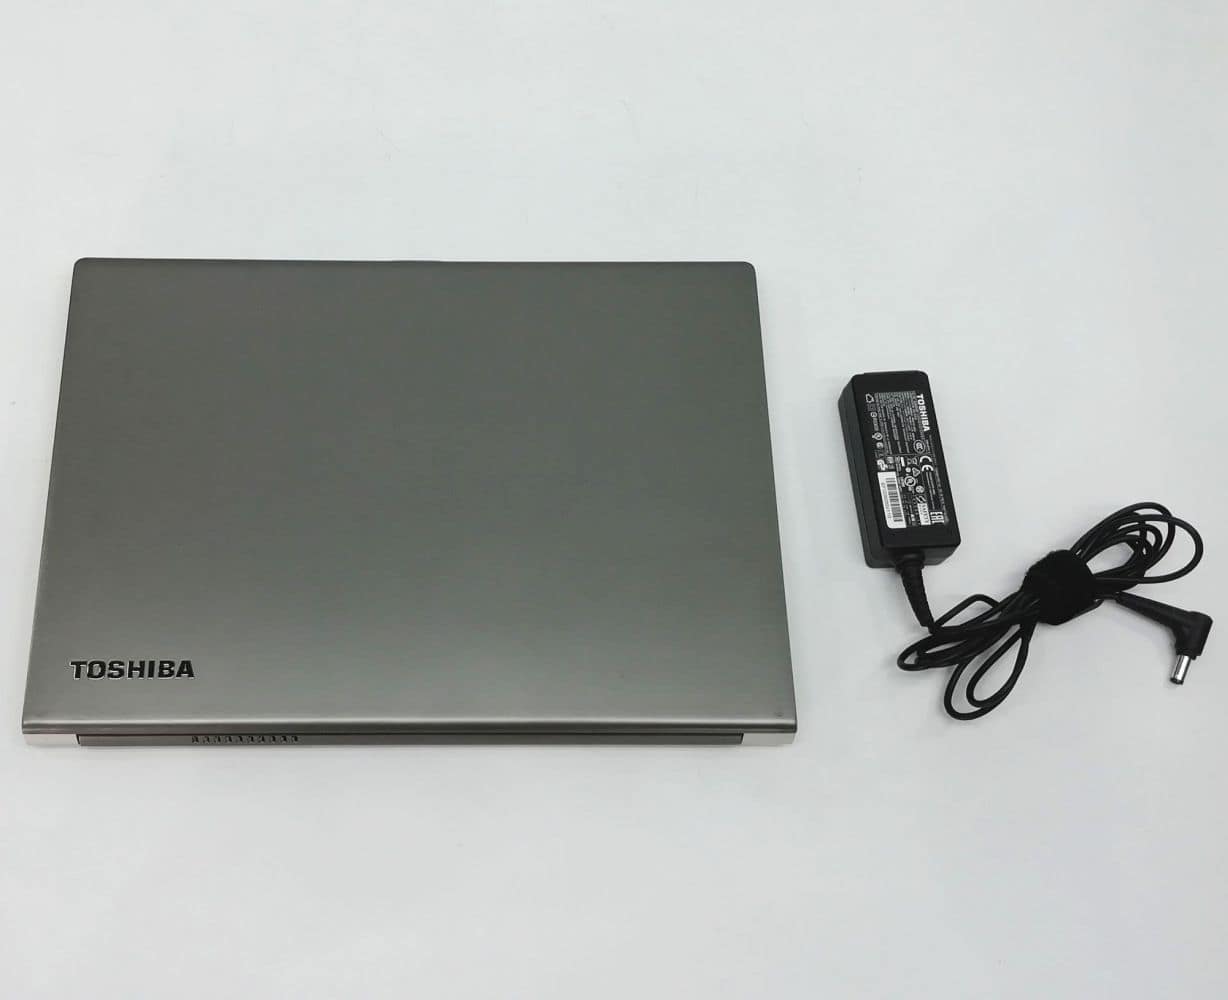 [Used]It is 　 the 　 Core i7 fifth generation [SSD installed] TOSHIBA  dynabook R63/P Core i7-5500U memory 16GB SSD256GB Windows10 Pro 64bit